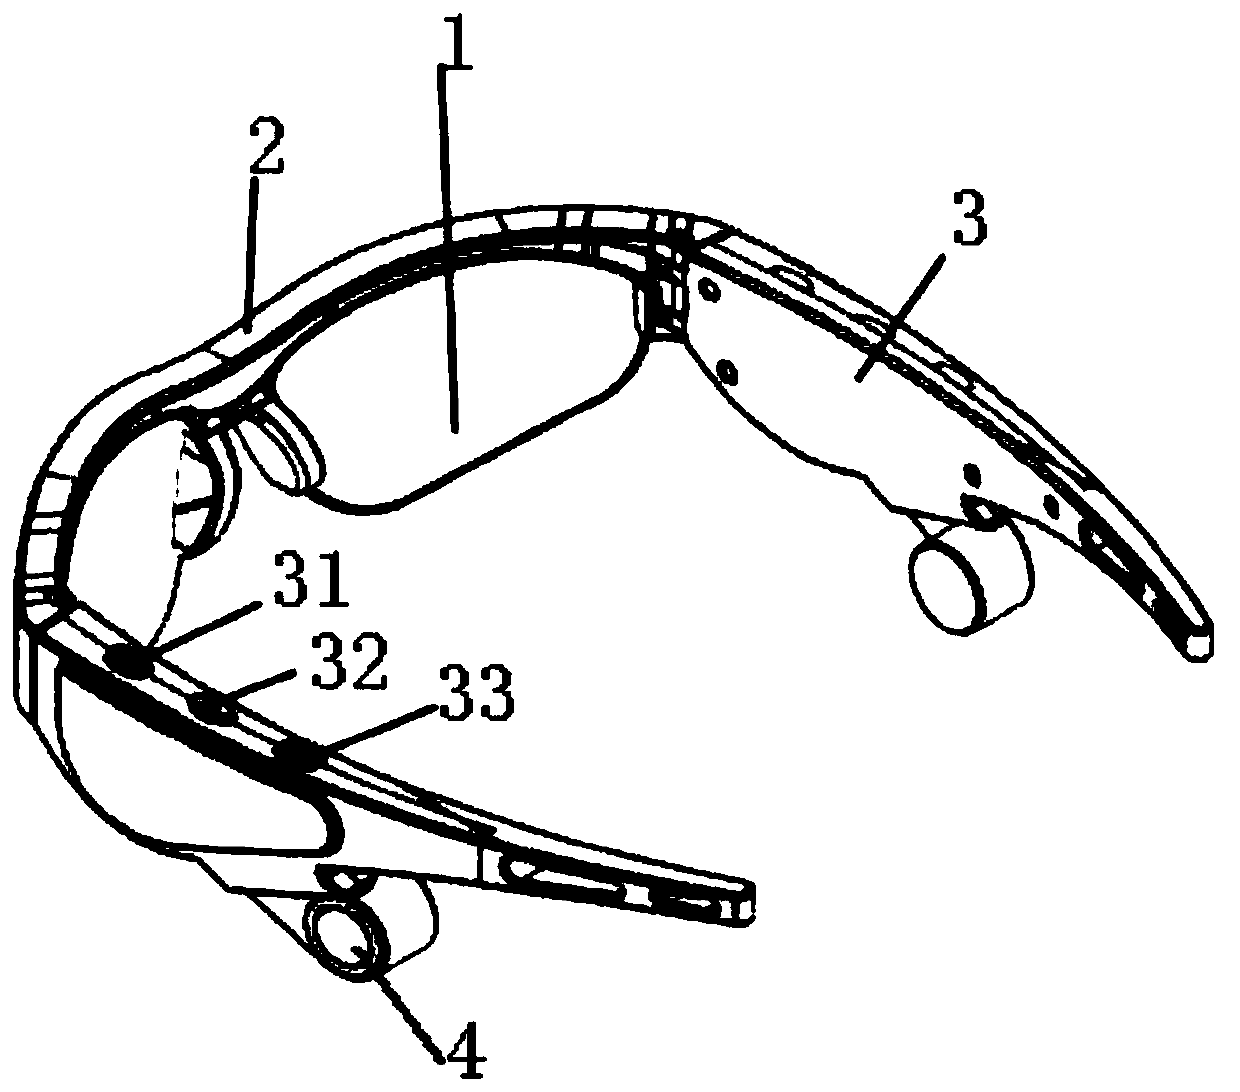 A bone conduction earphone mounted on sunglasses